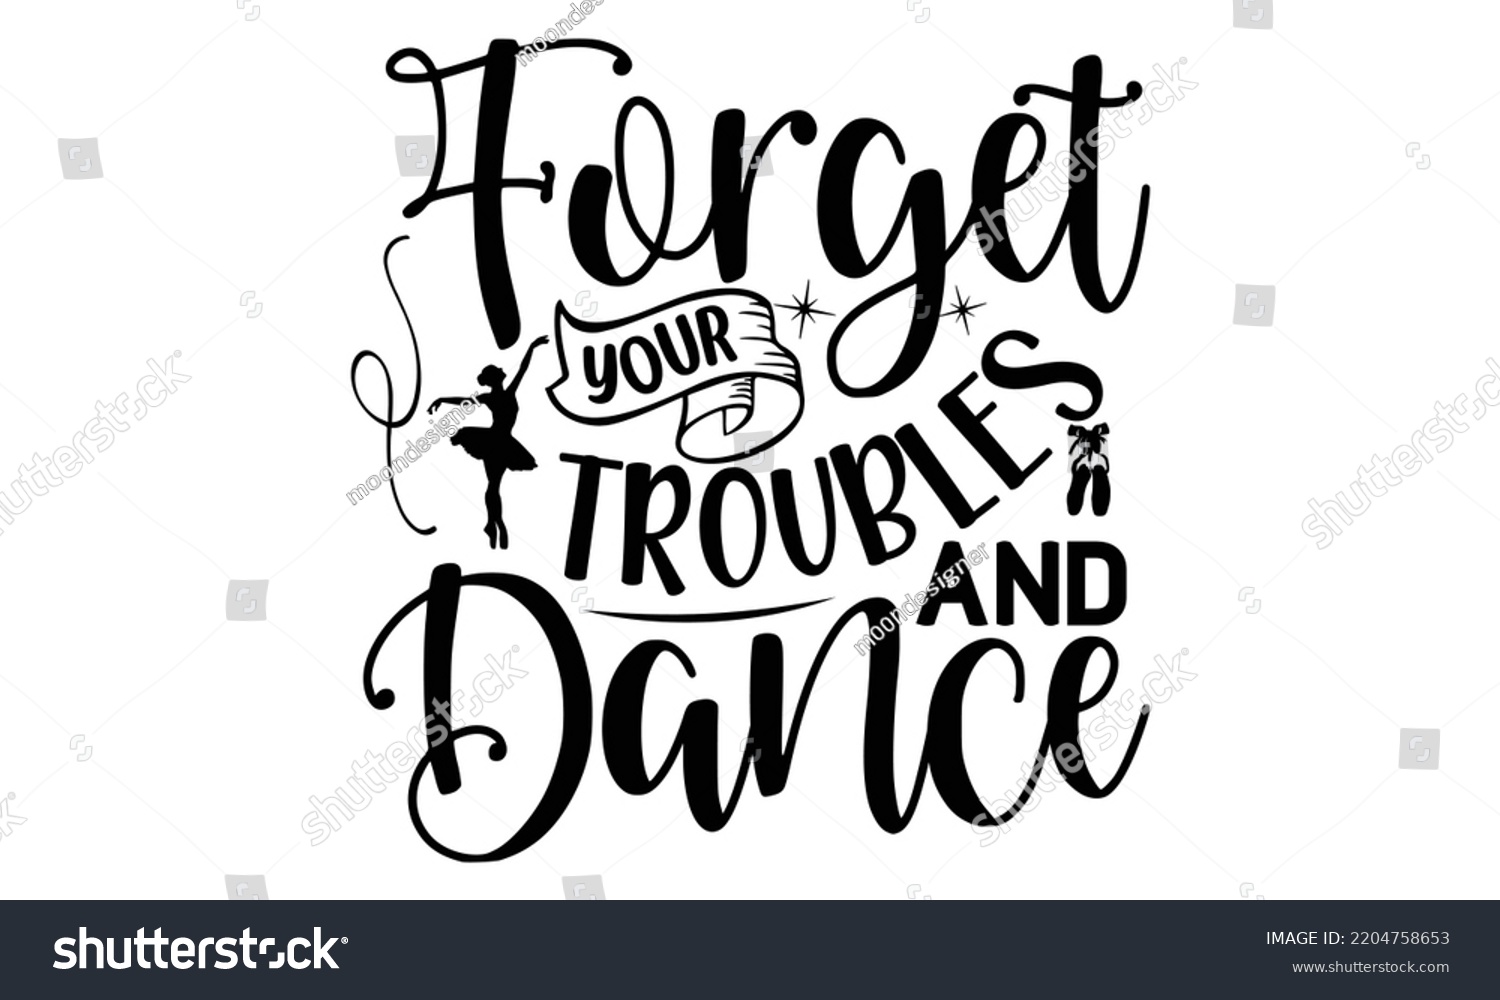 SVG of forget your troubles and dance - Ballet svg t shirt design, ballet SVG Cut Files, Girl Ballet Design, Hand drawn lettering phrase and vector sign, EPS 10 svg